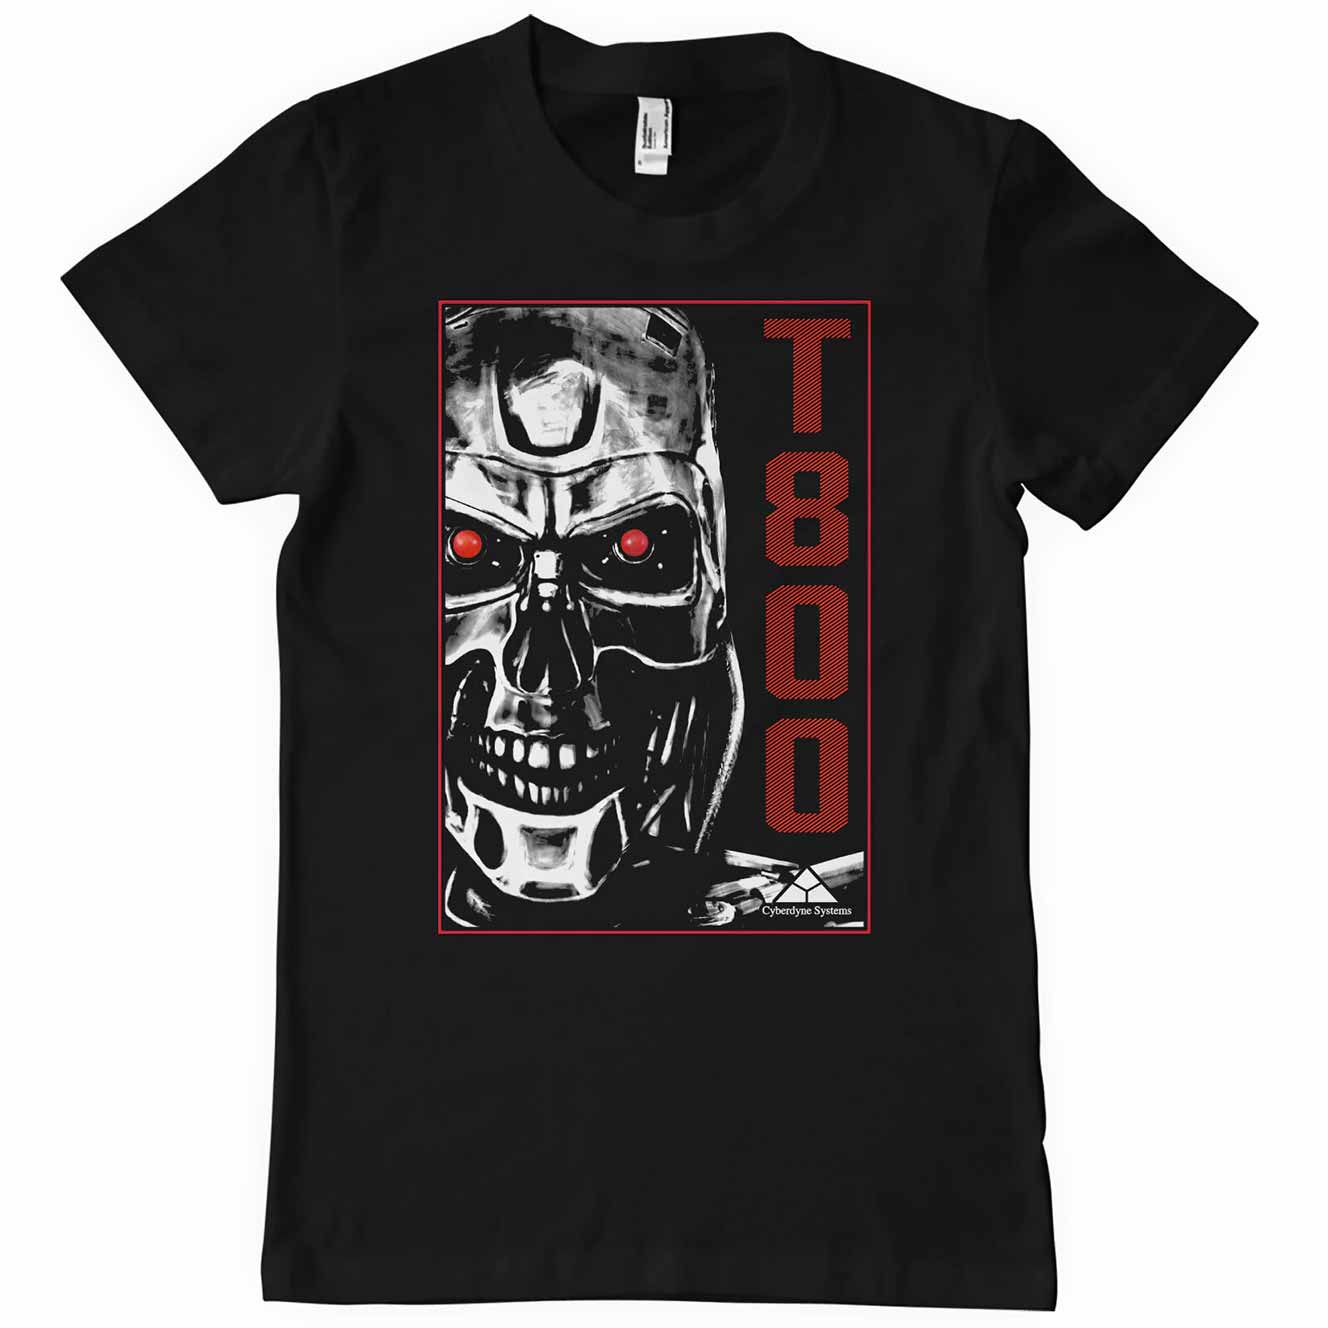 Terminator T-800 T-shirt